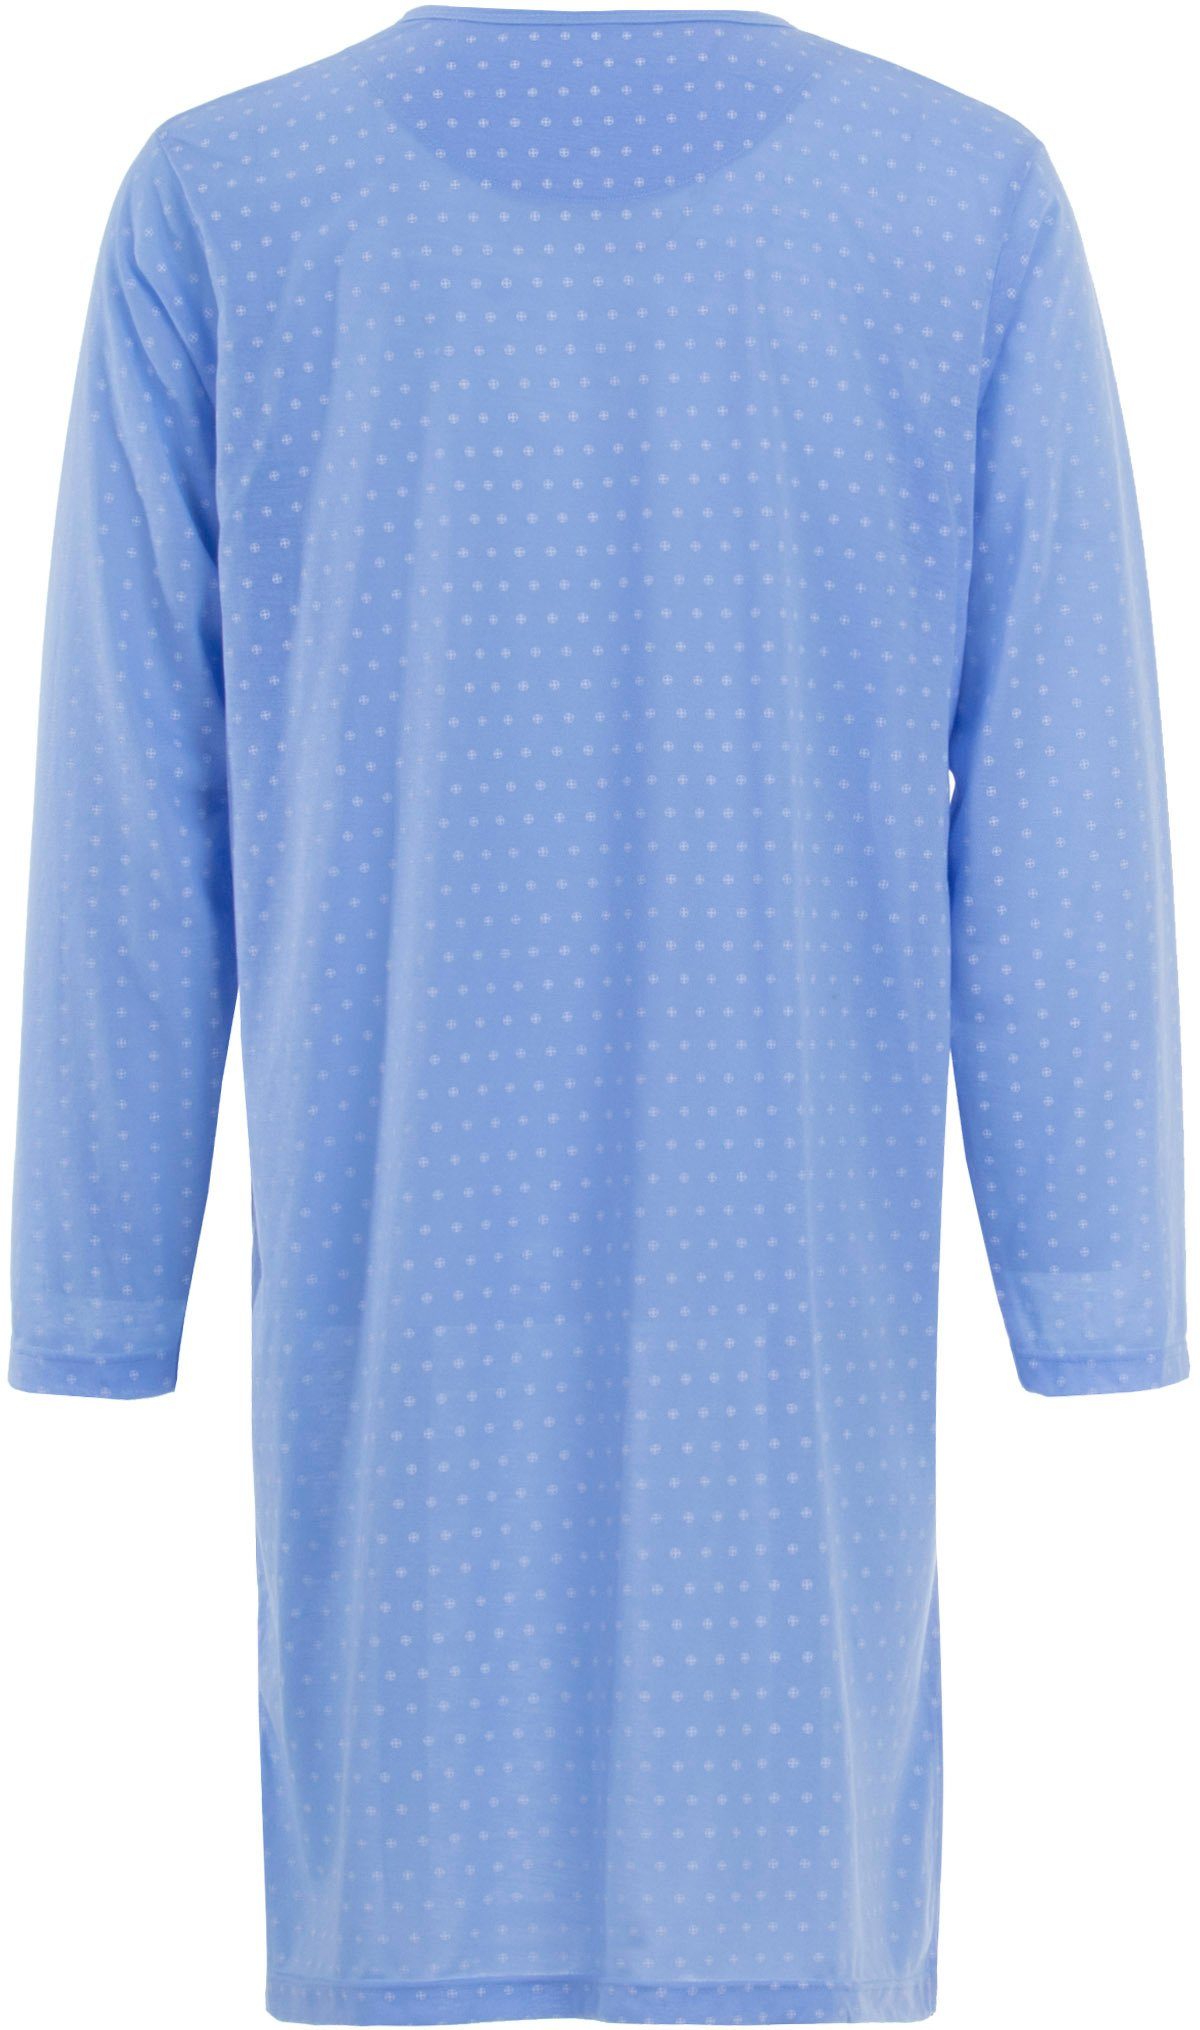 Henry Terre Nachthemd Ball Nachthemd - blau Langarm